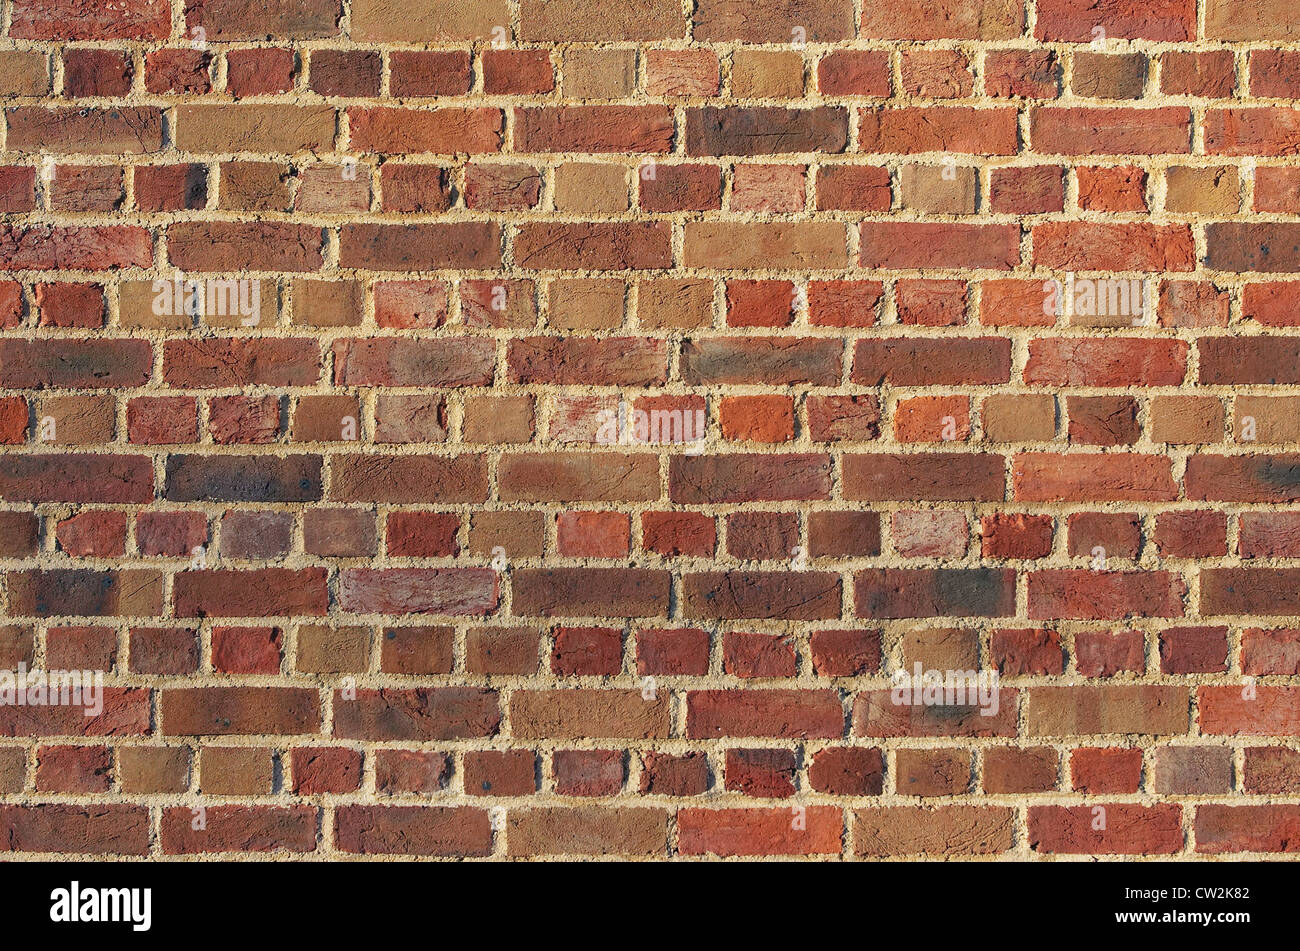 English bond brickwork hi-res stock photography and images - Alamy